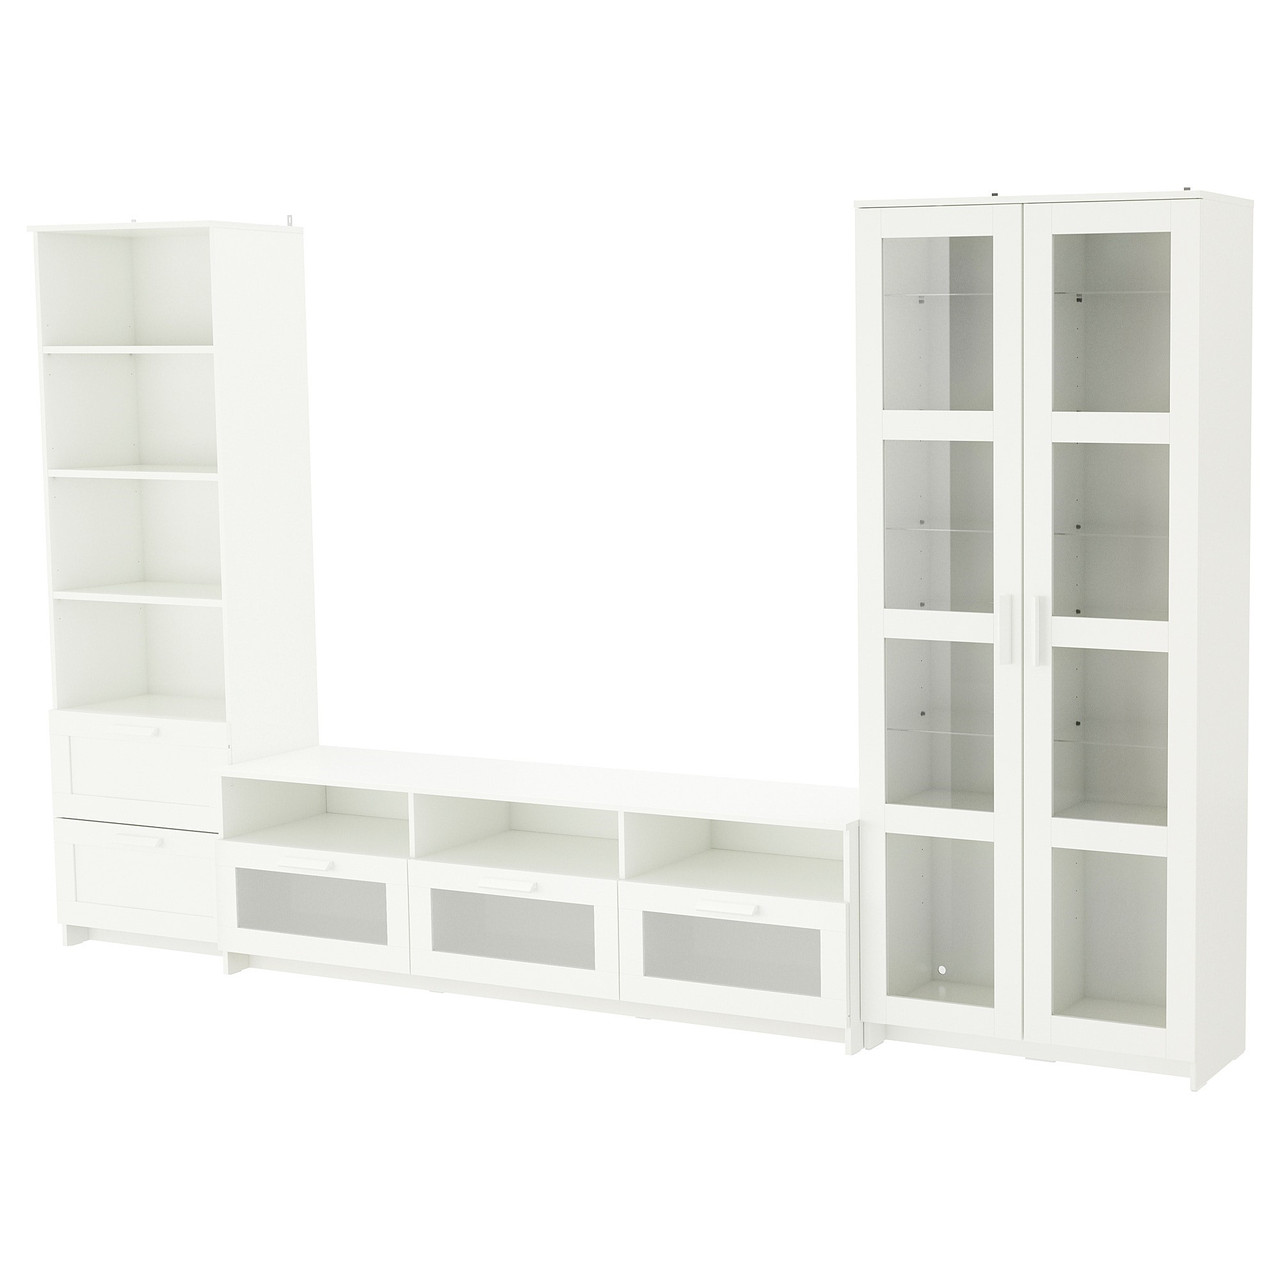 Шкаф для ТВ комбин/стеклян дверцы БРИМНЭС белый ИКЕА, IKEA 